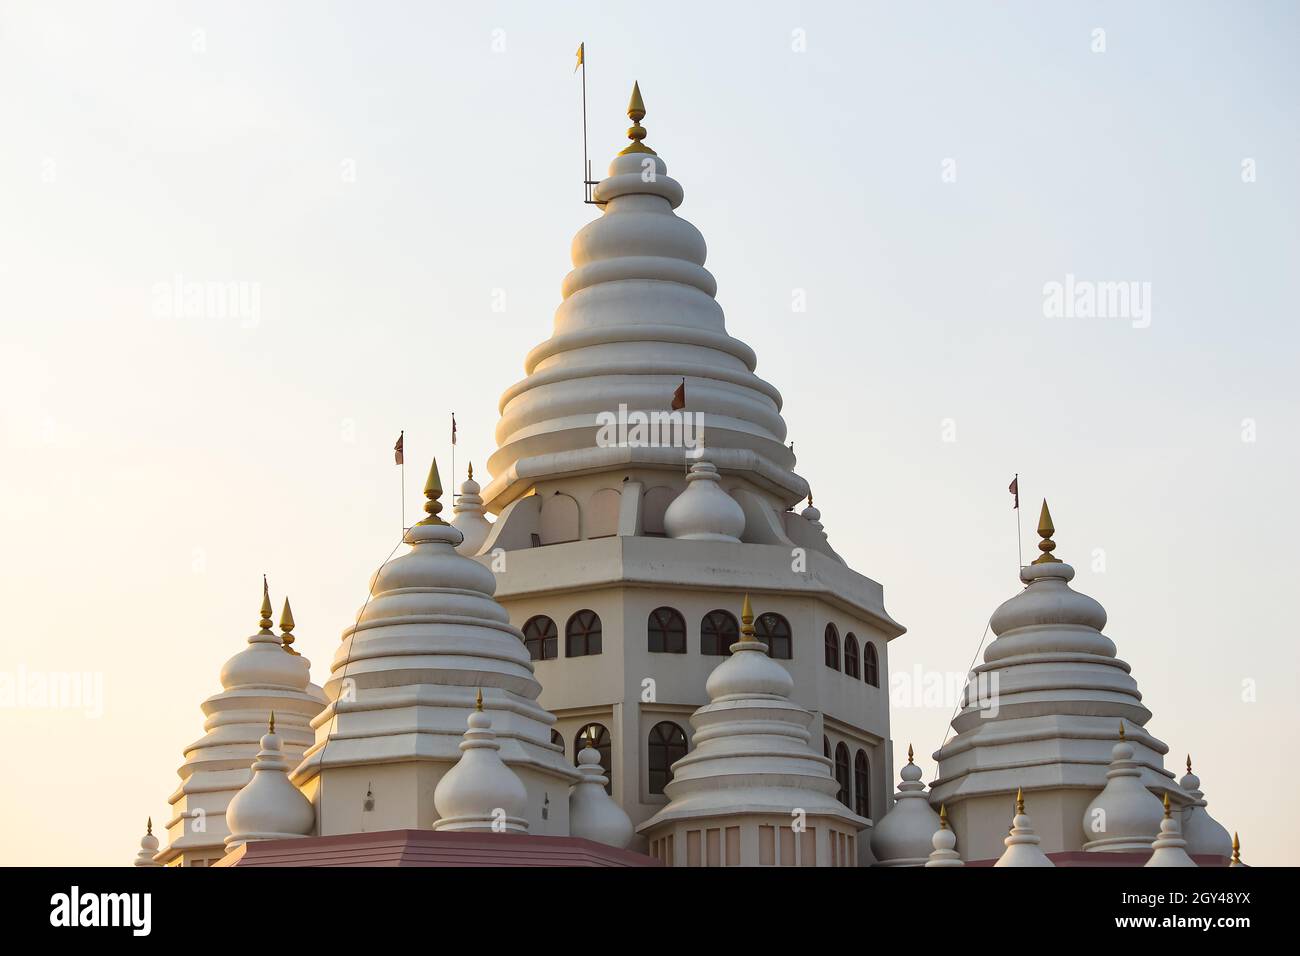 Le beau temple hindou de Gatha, qui construit en marbre blanc, Dehu.Maharashtra. Banque D'Images